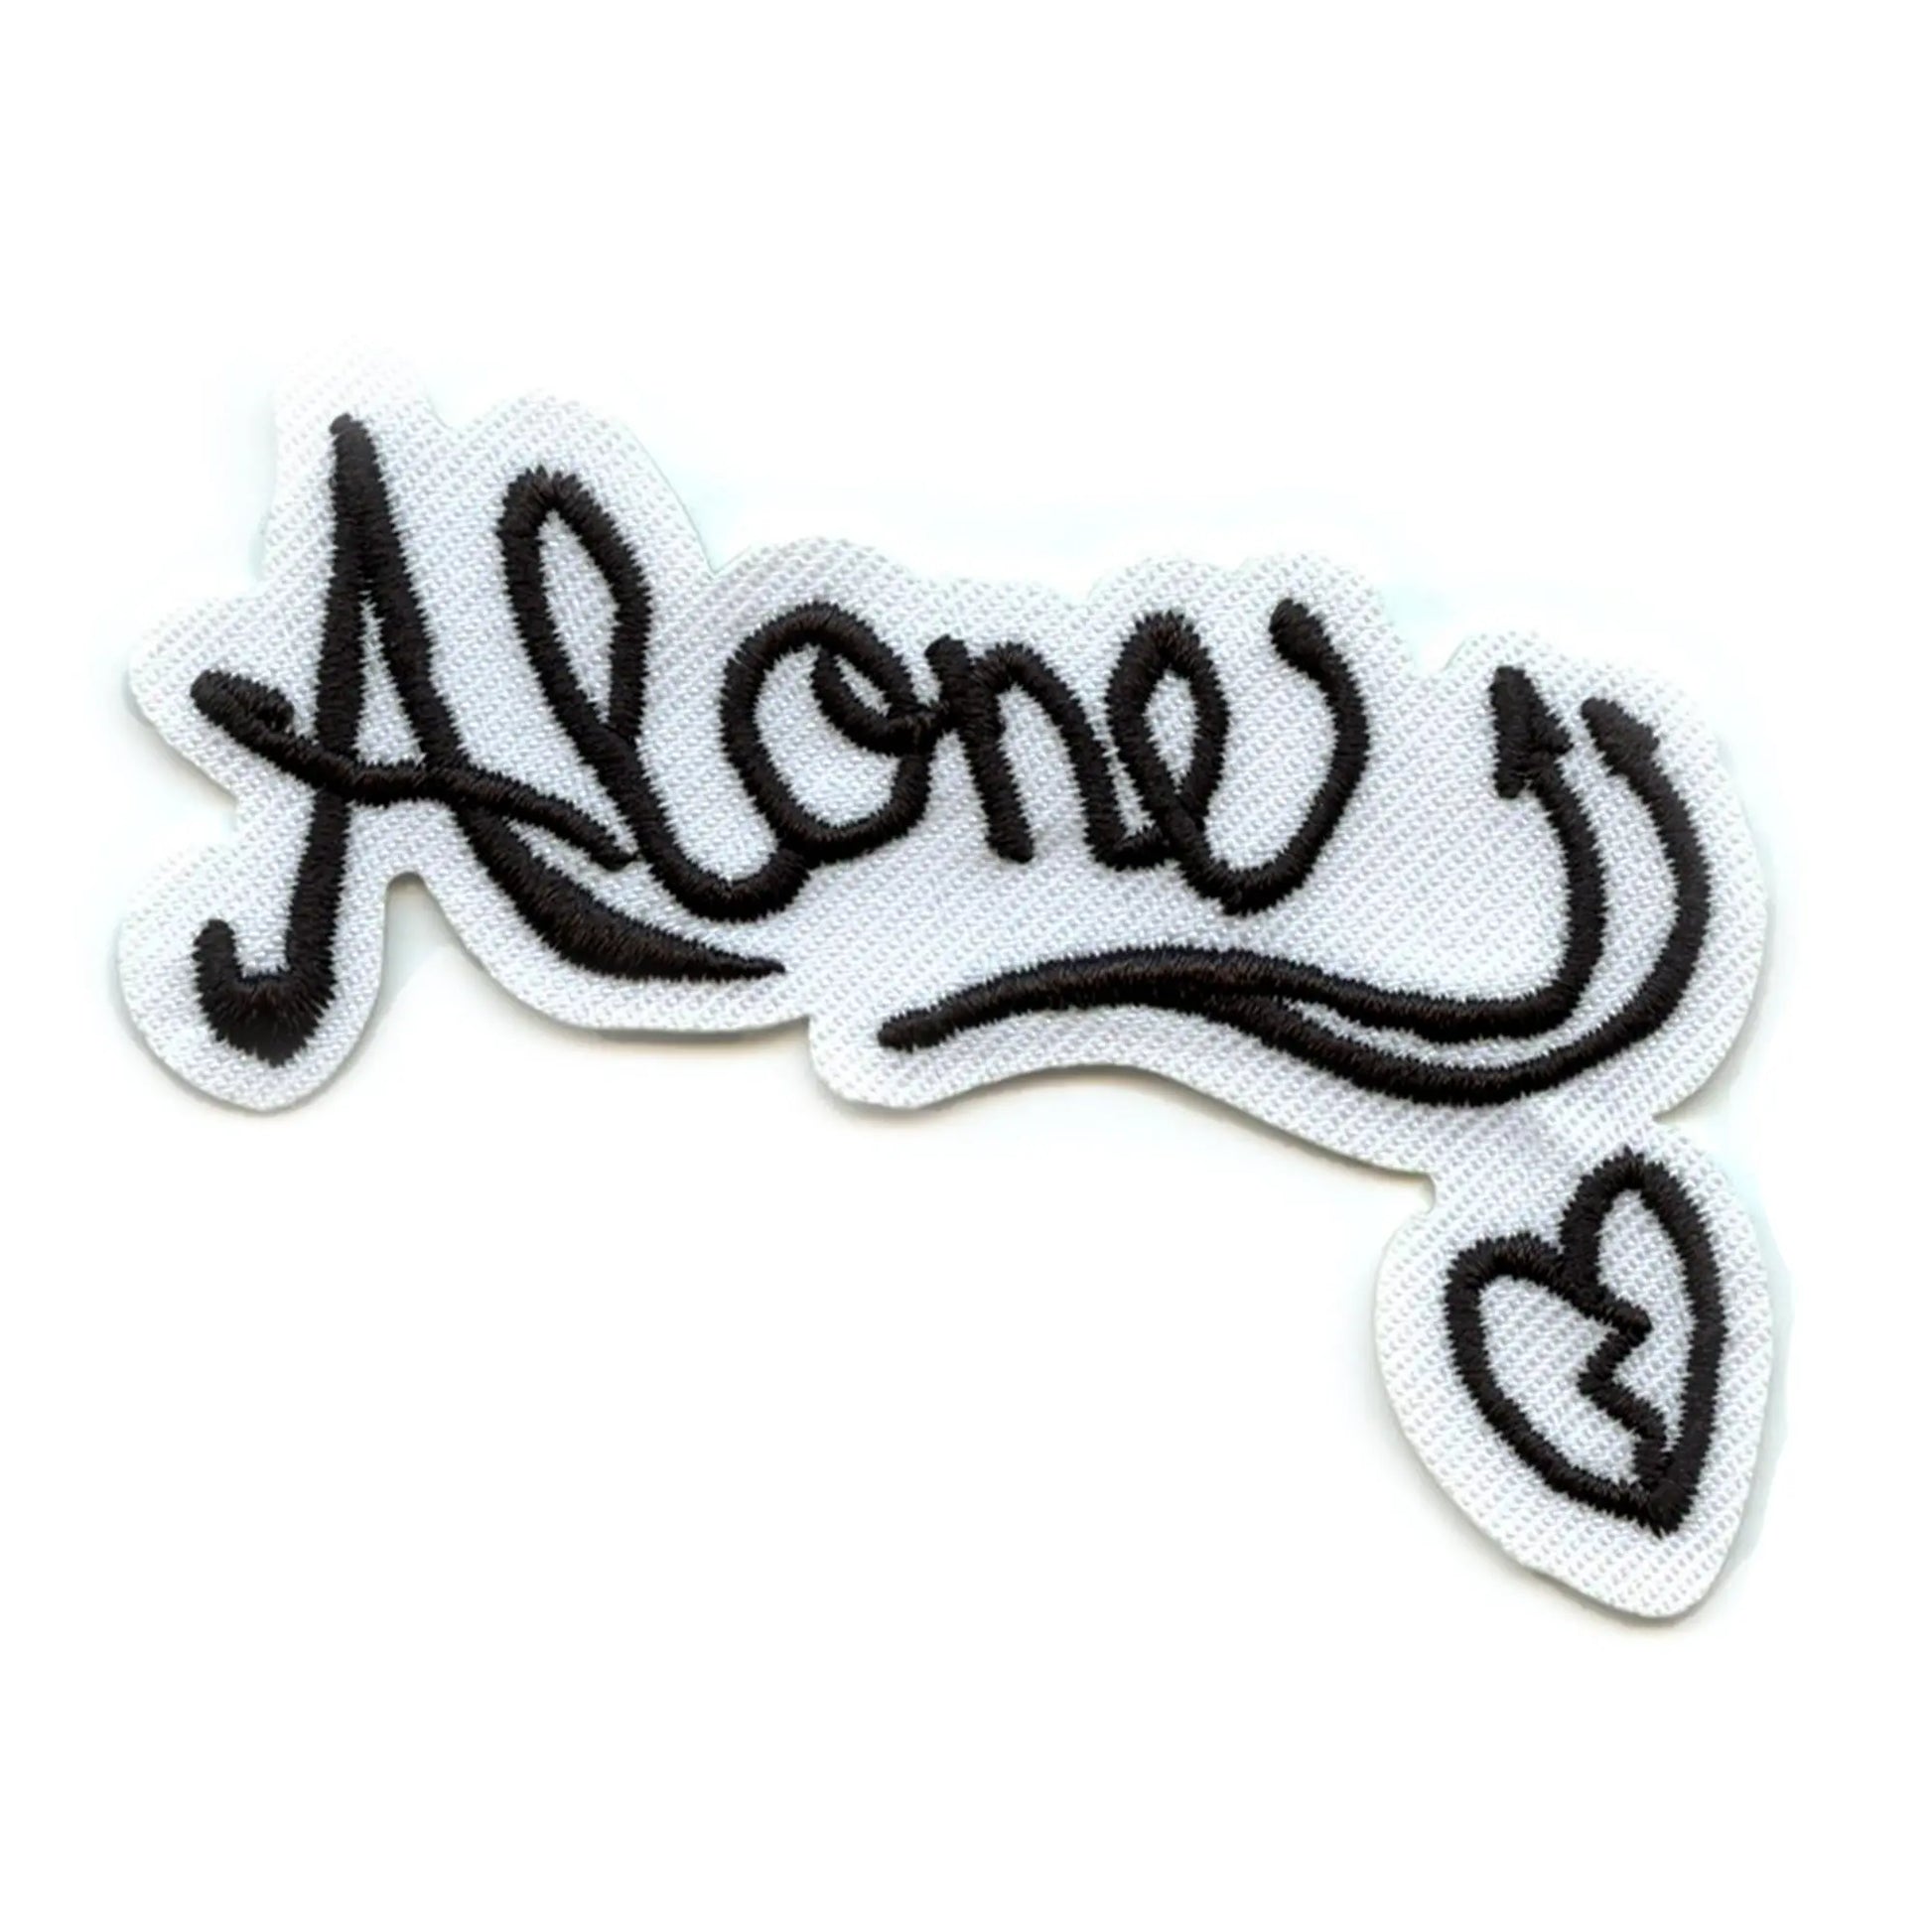 Alone Heart